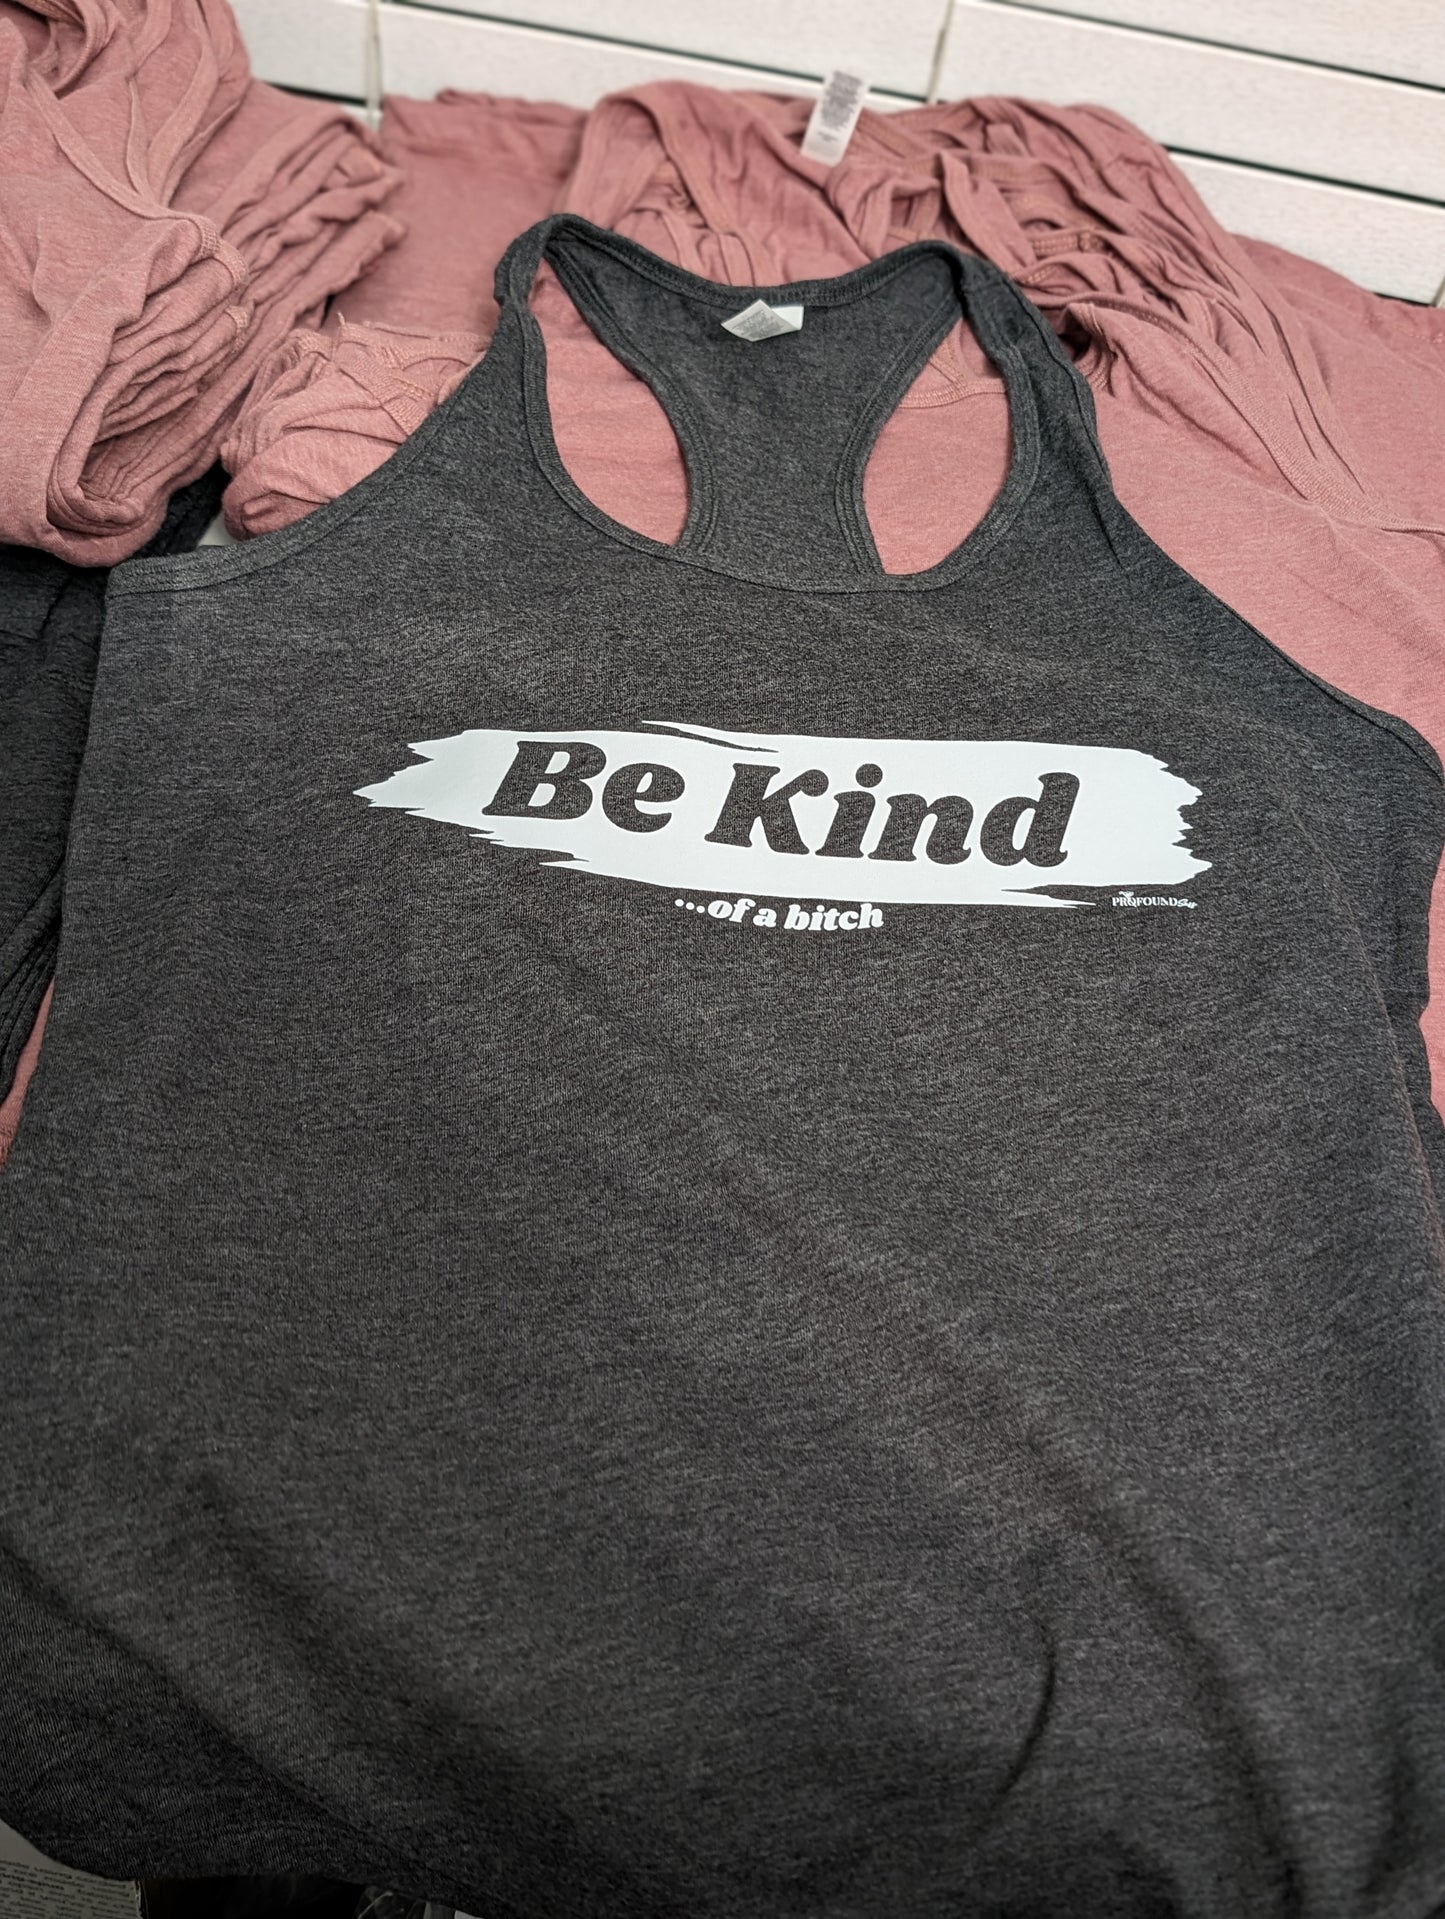 Be Kind... of a Bitch Racerback Tank